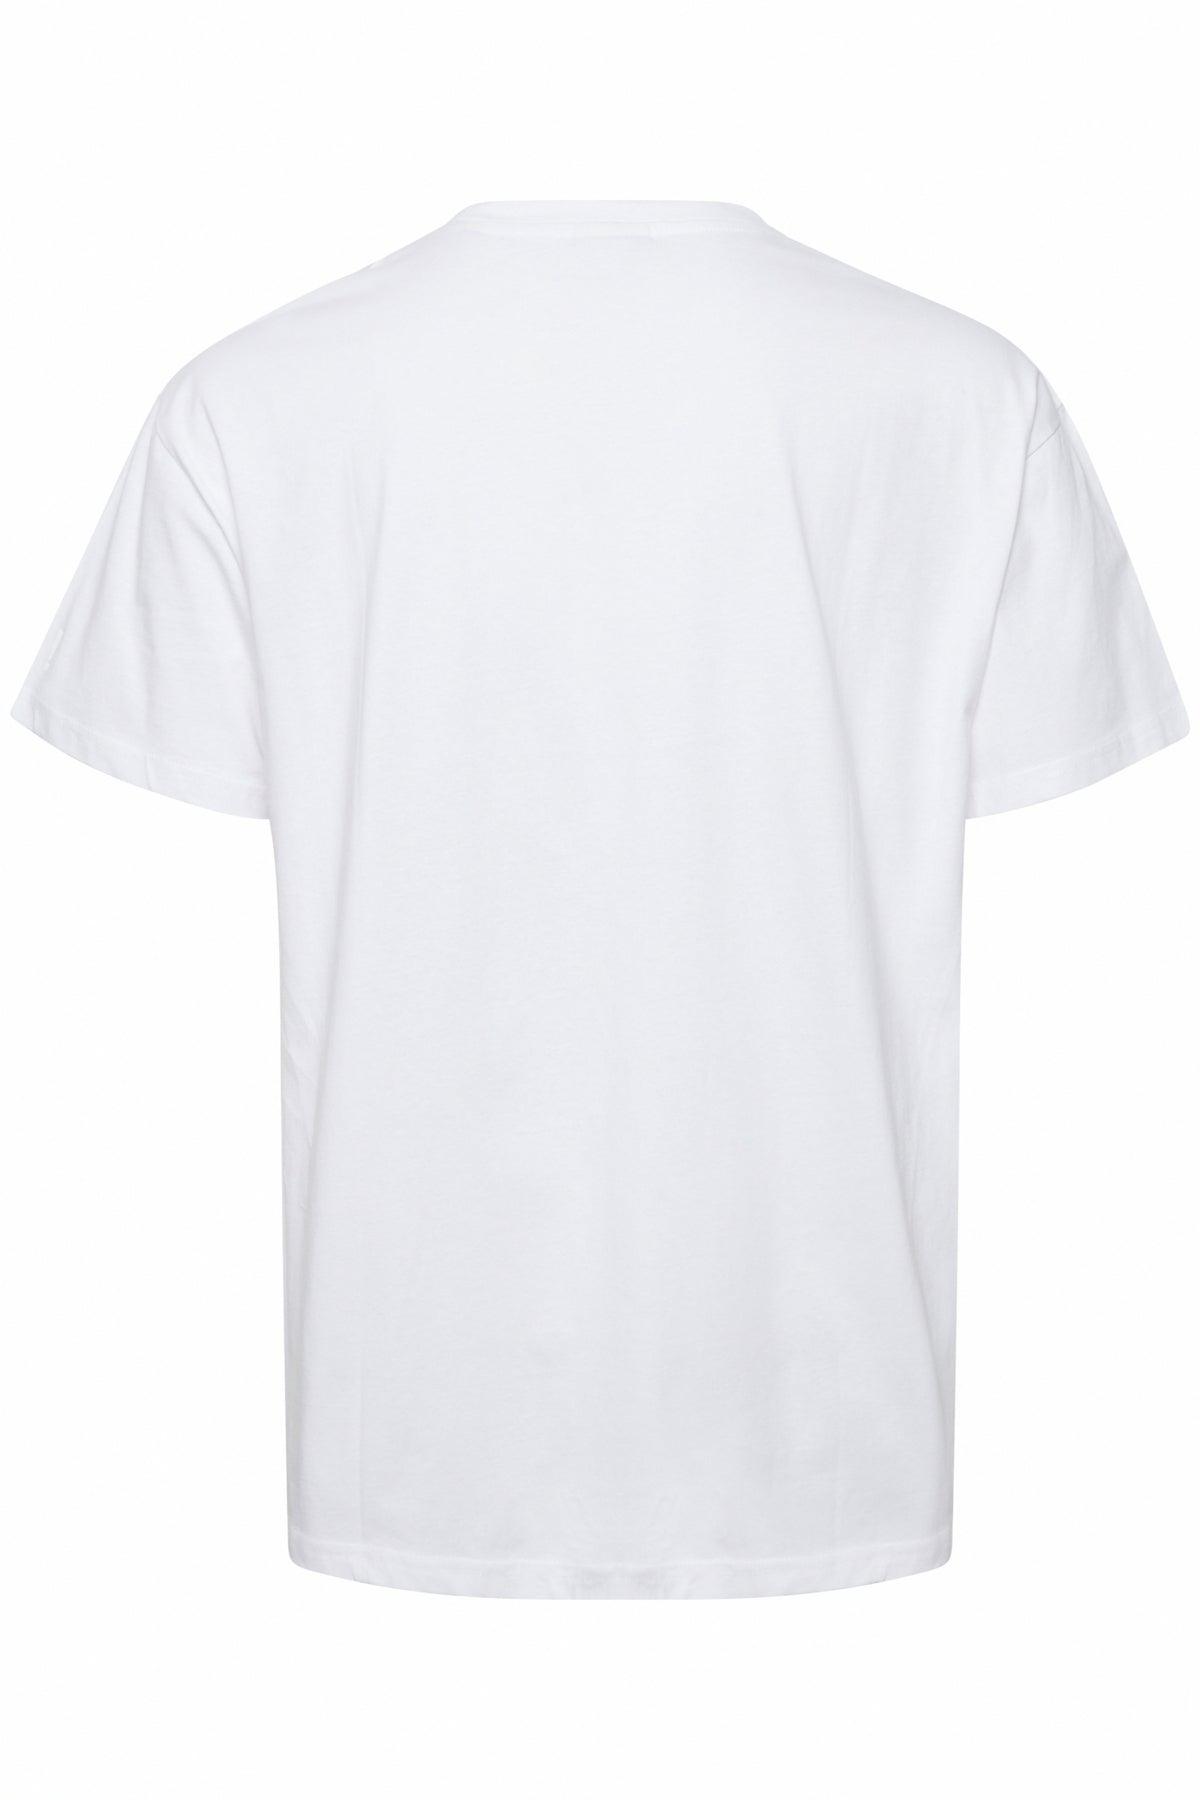 Camiseta !Solid de Hombre Manga Corta Ellington White - ECRU